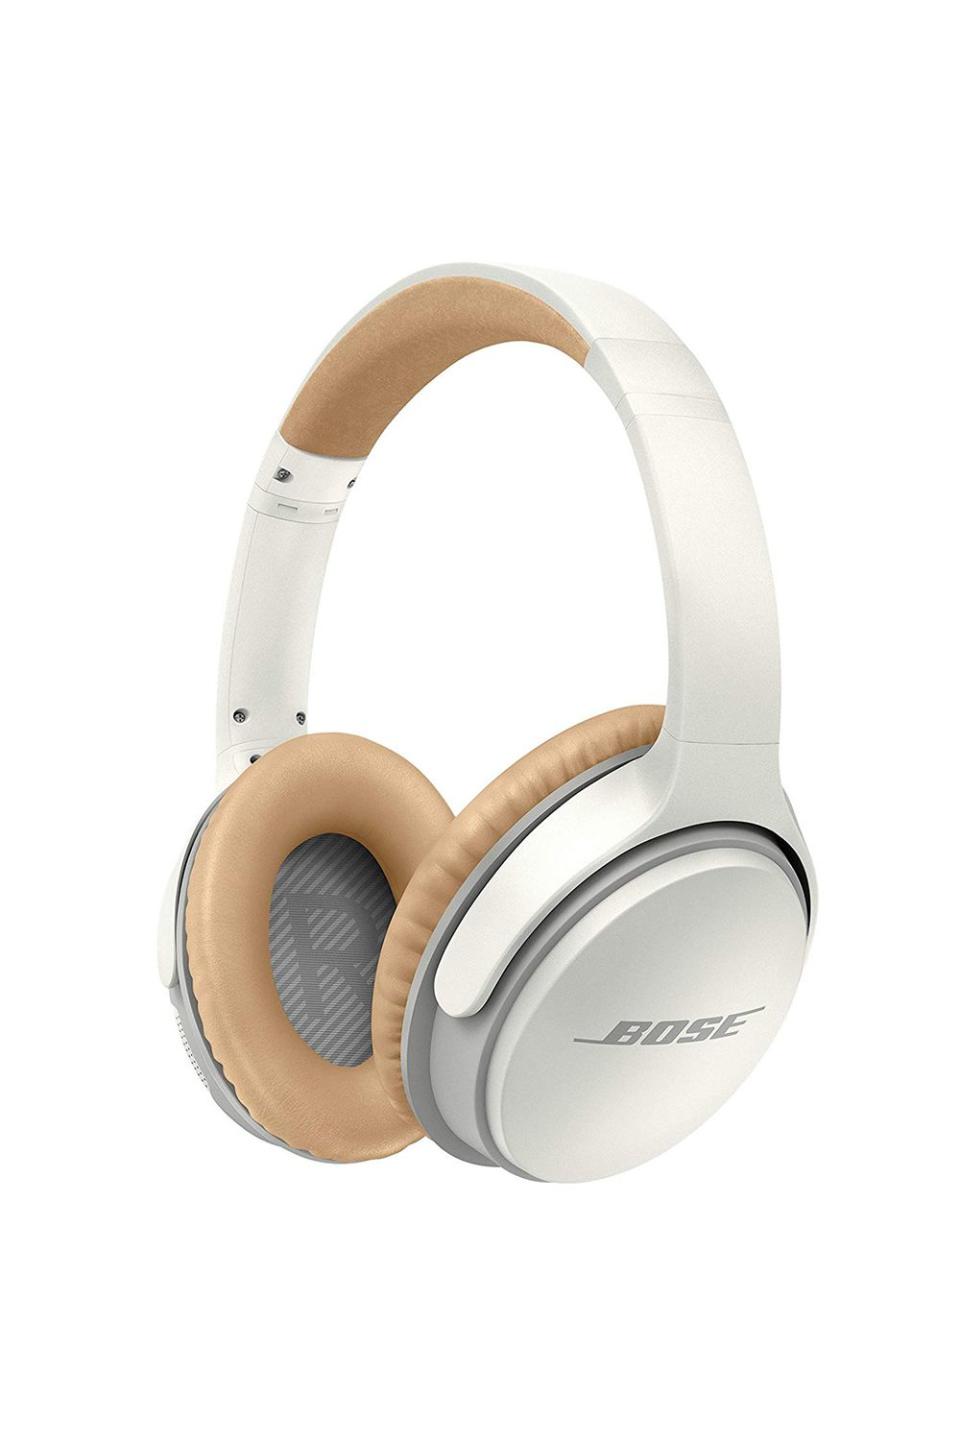 Bose SoundLink Wireless Headphones